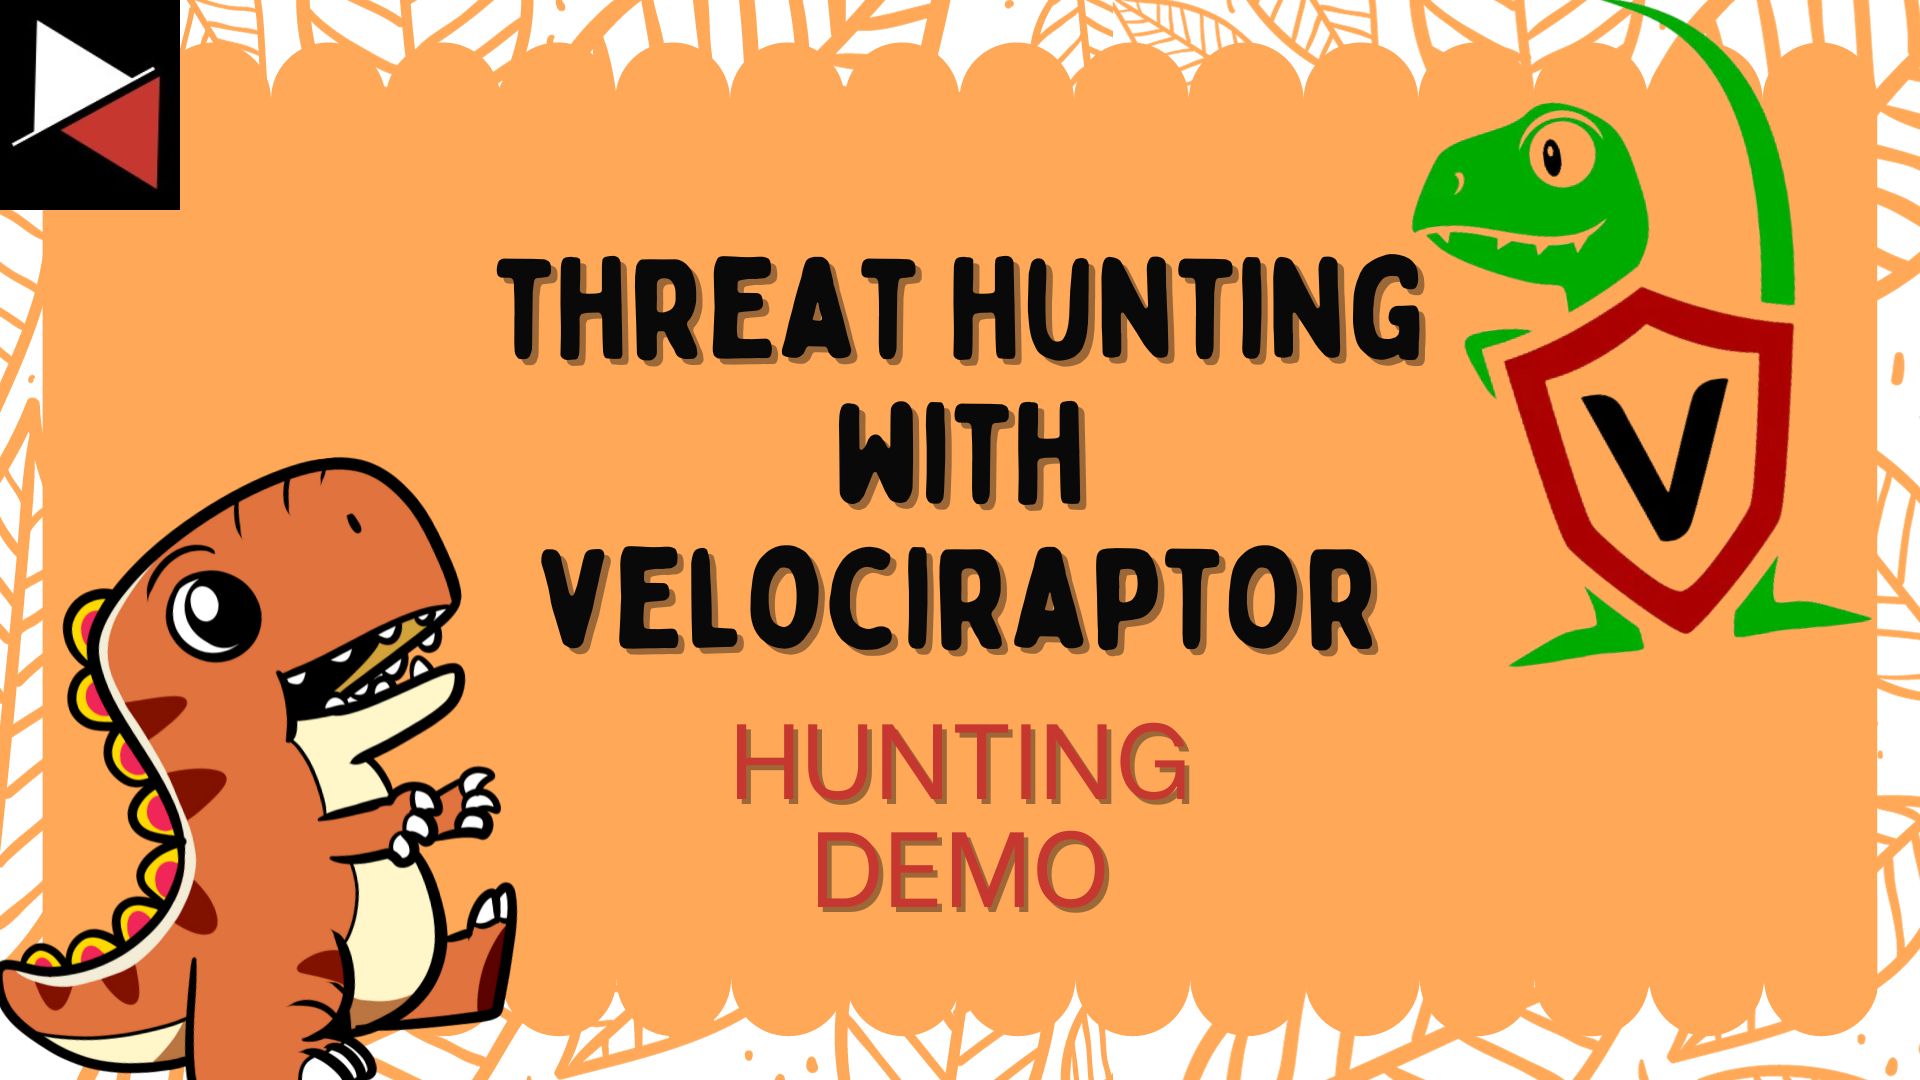 Threat Hunting with Velociraptor III - Hunting Demo